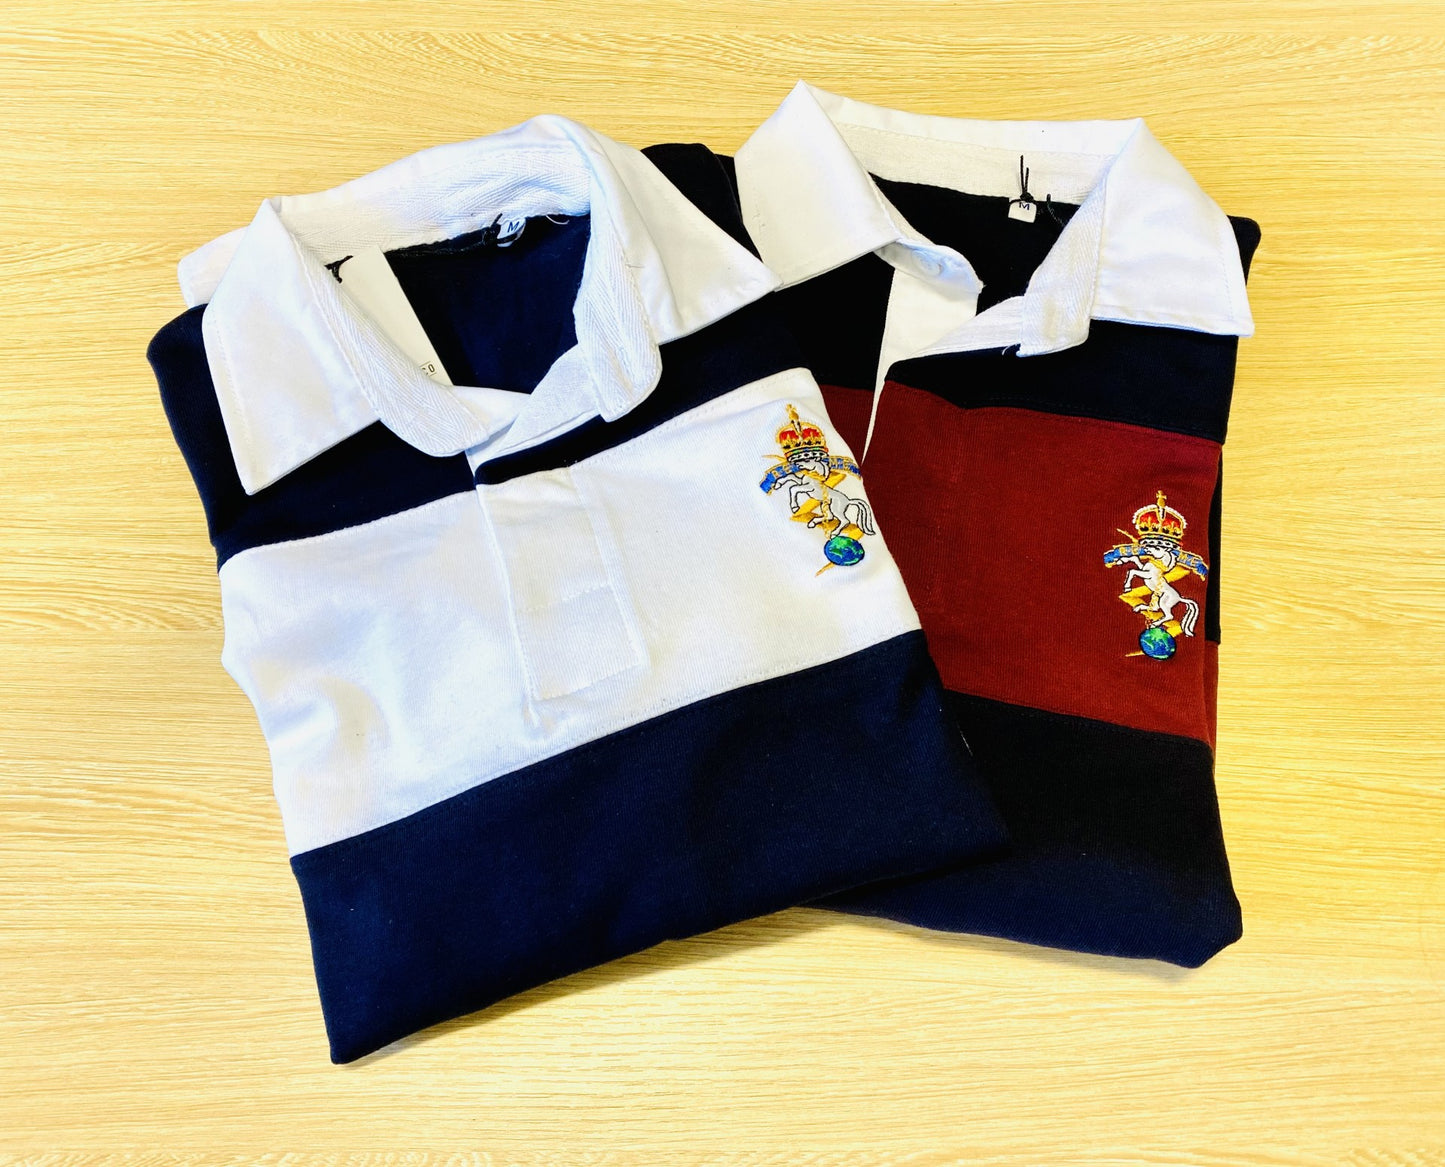 REME Rugby Shirt - Burgundy/Navy Stripe